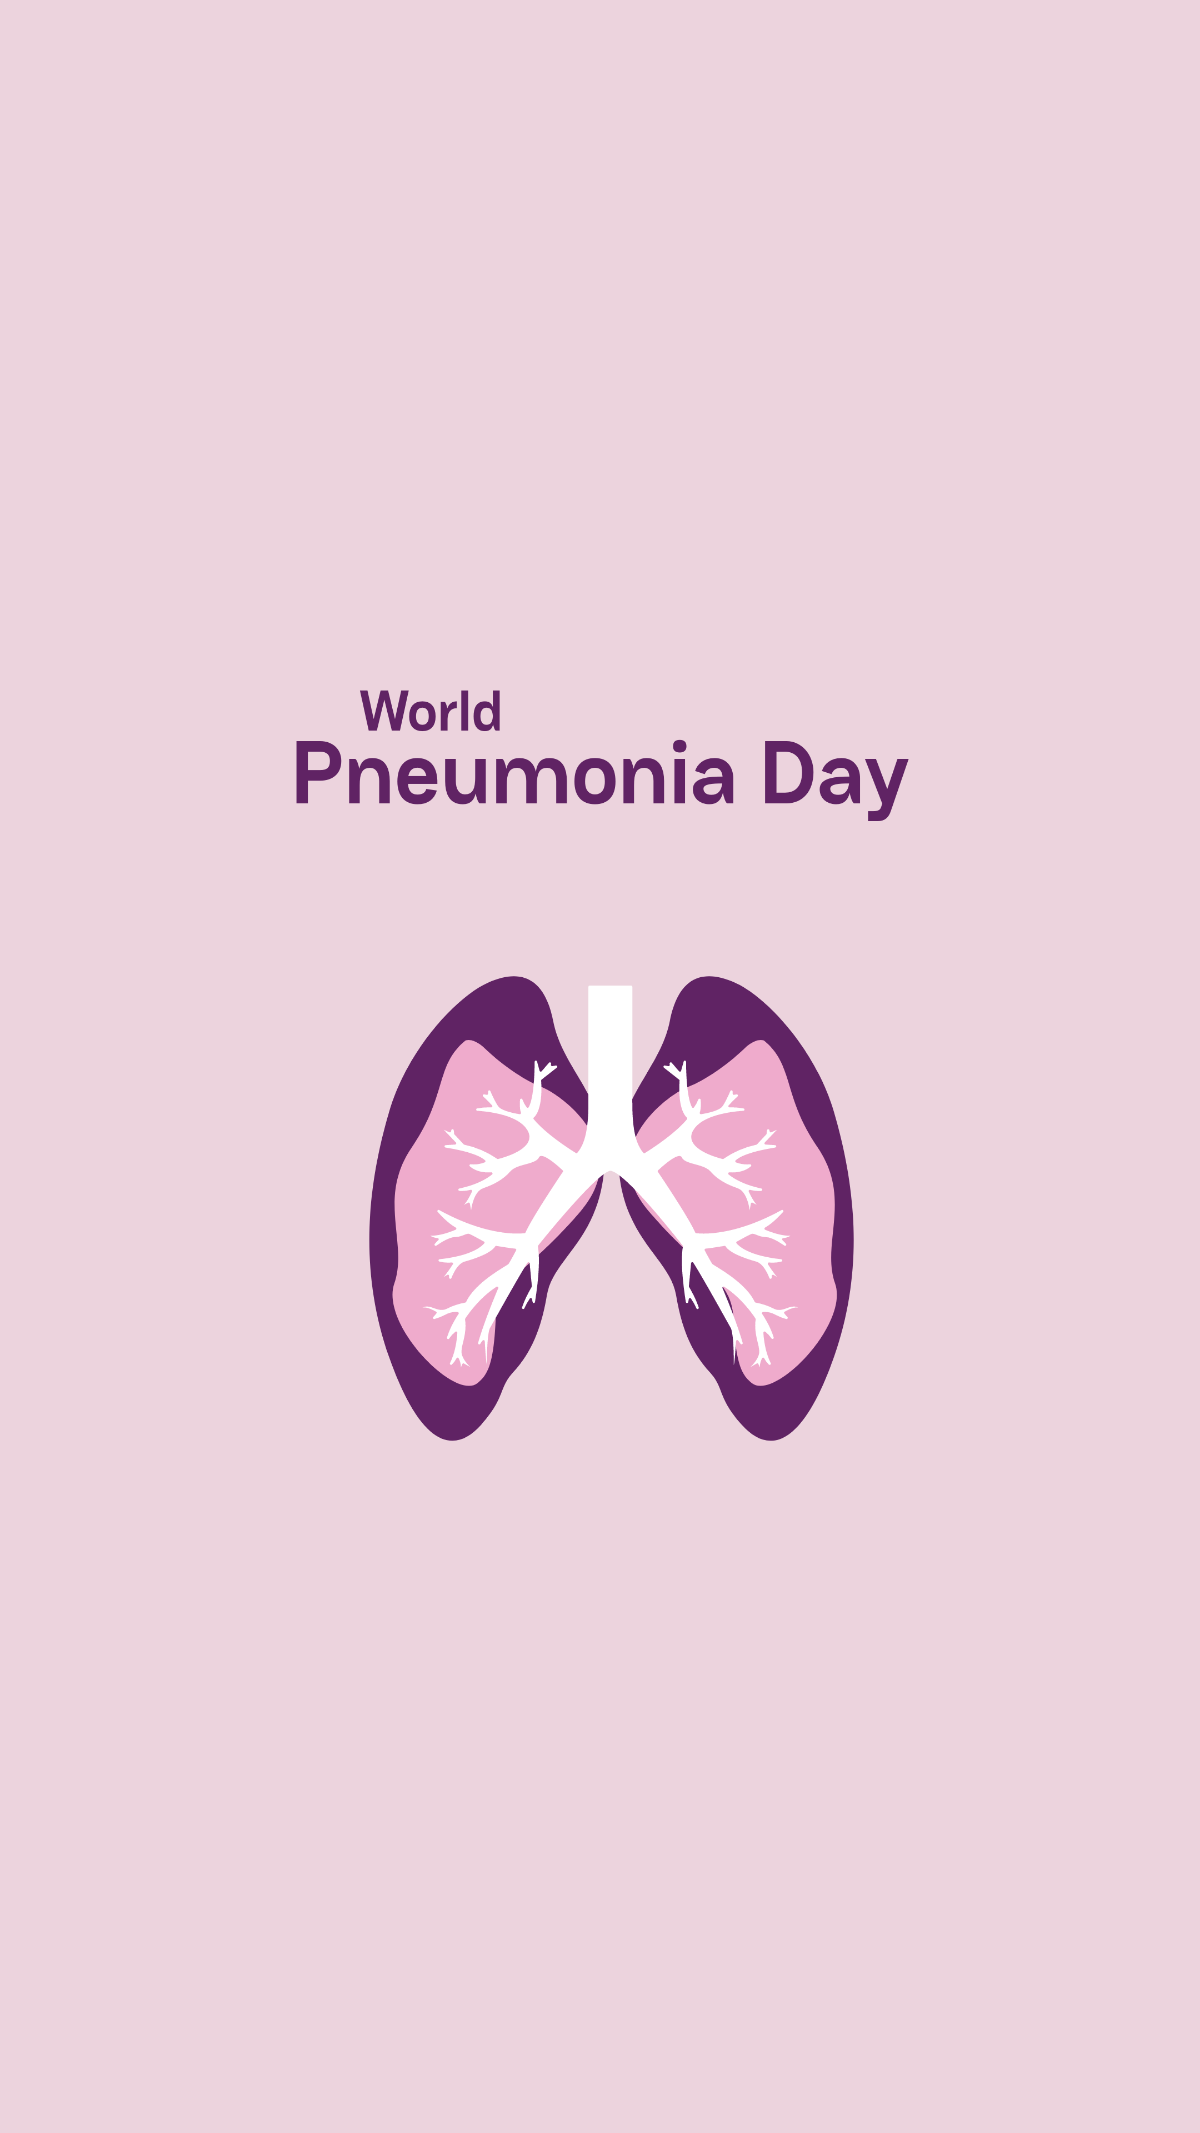 World Pneumonia Day iPhone Background Template